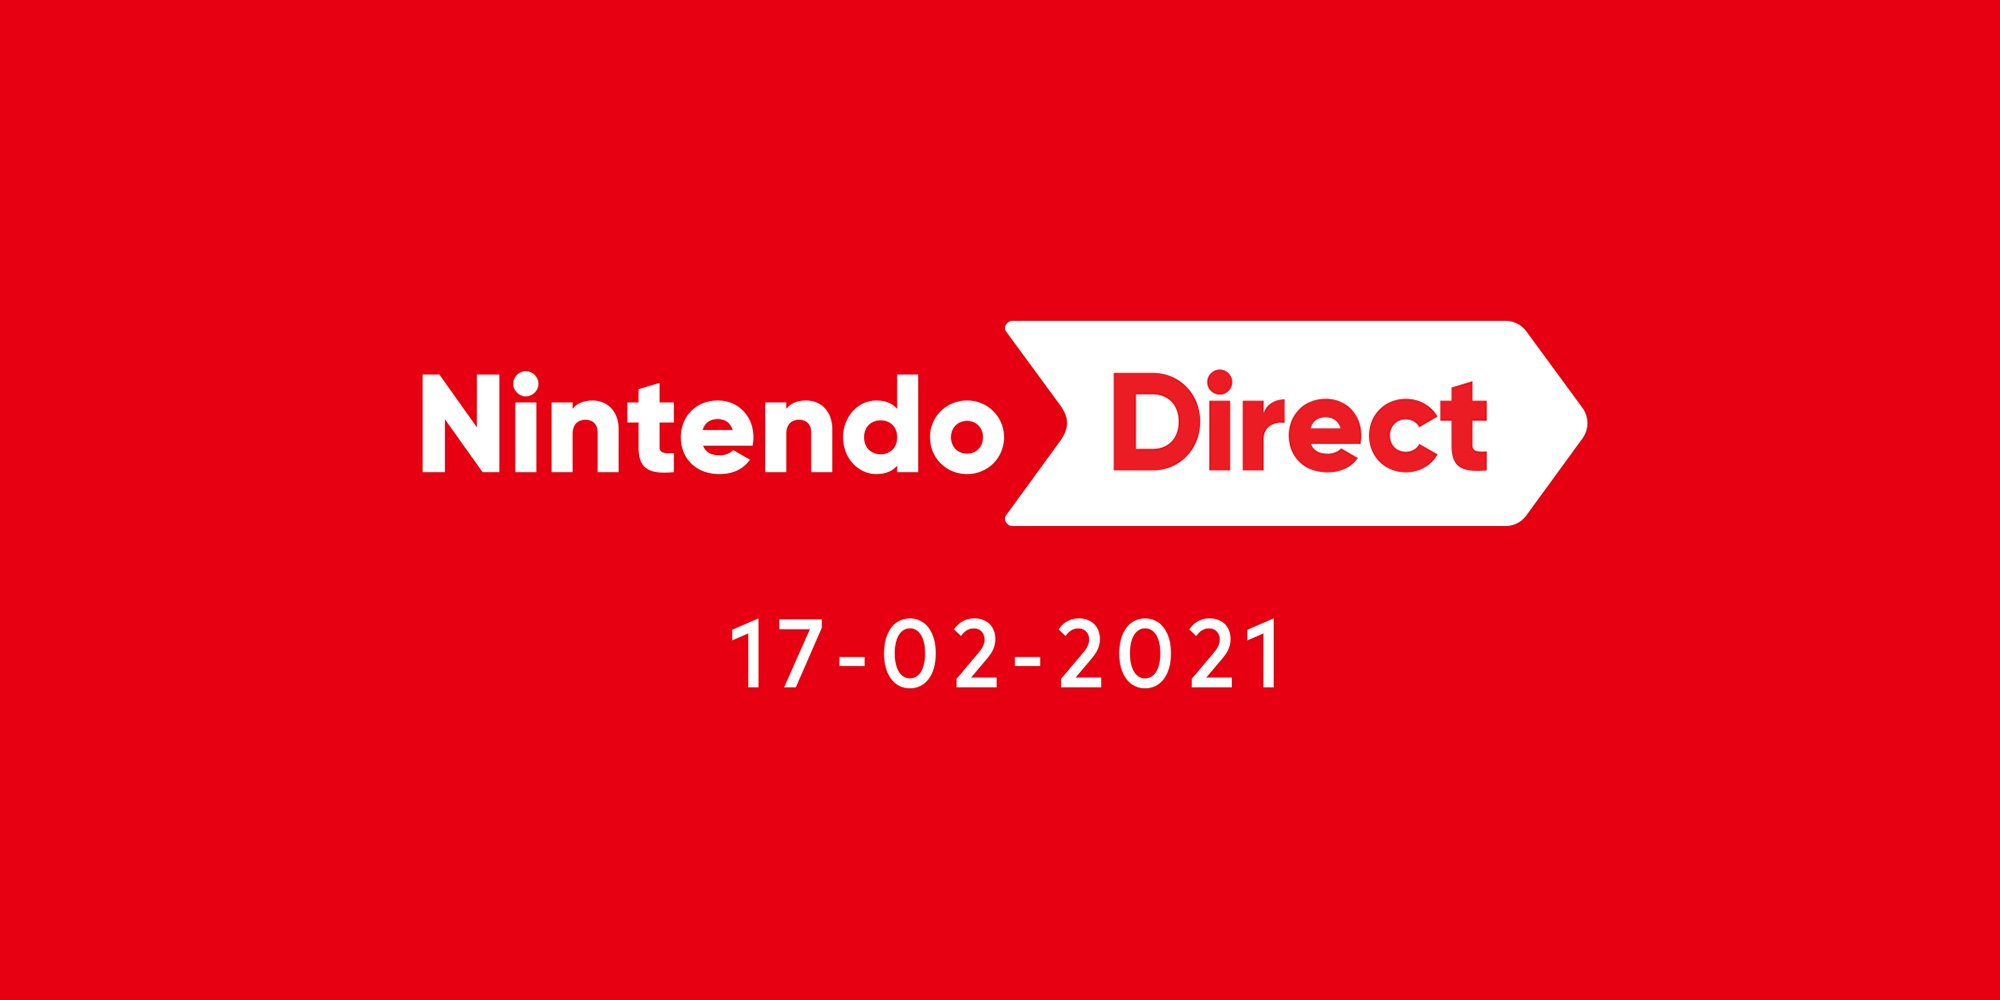 Nintendo Direct 17 de febrero